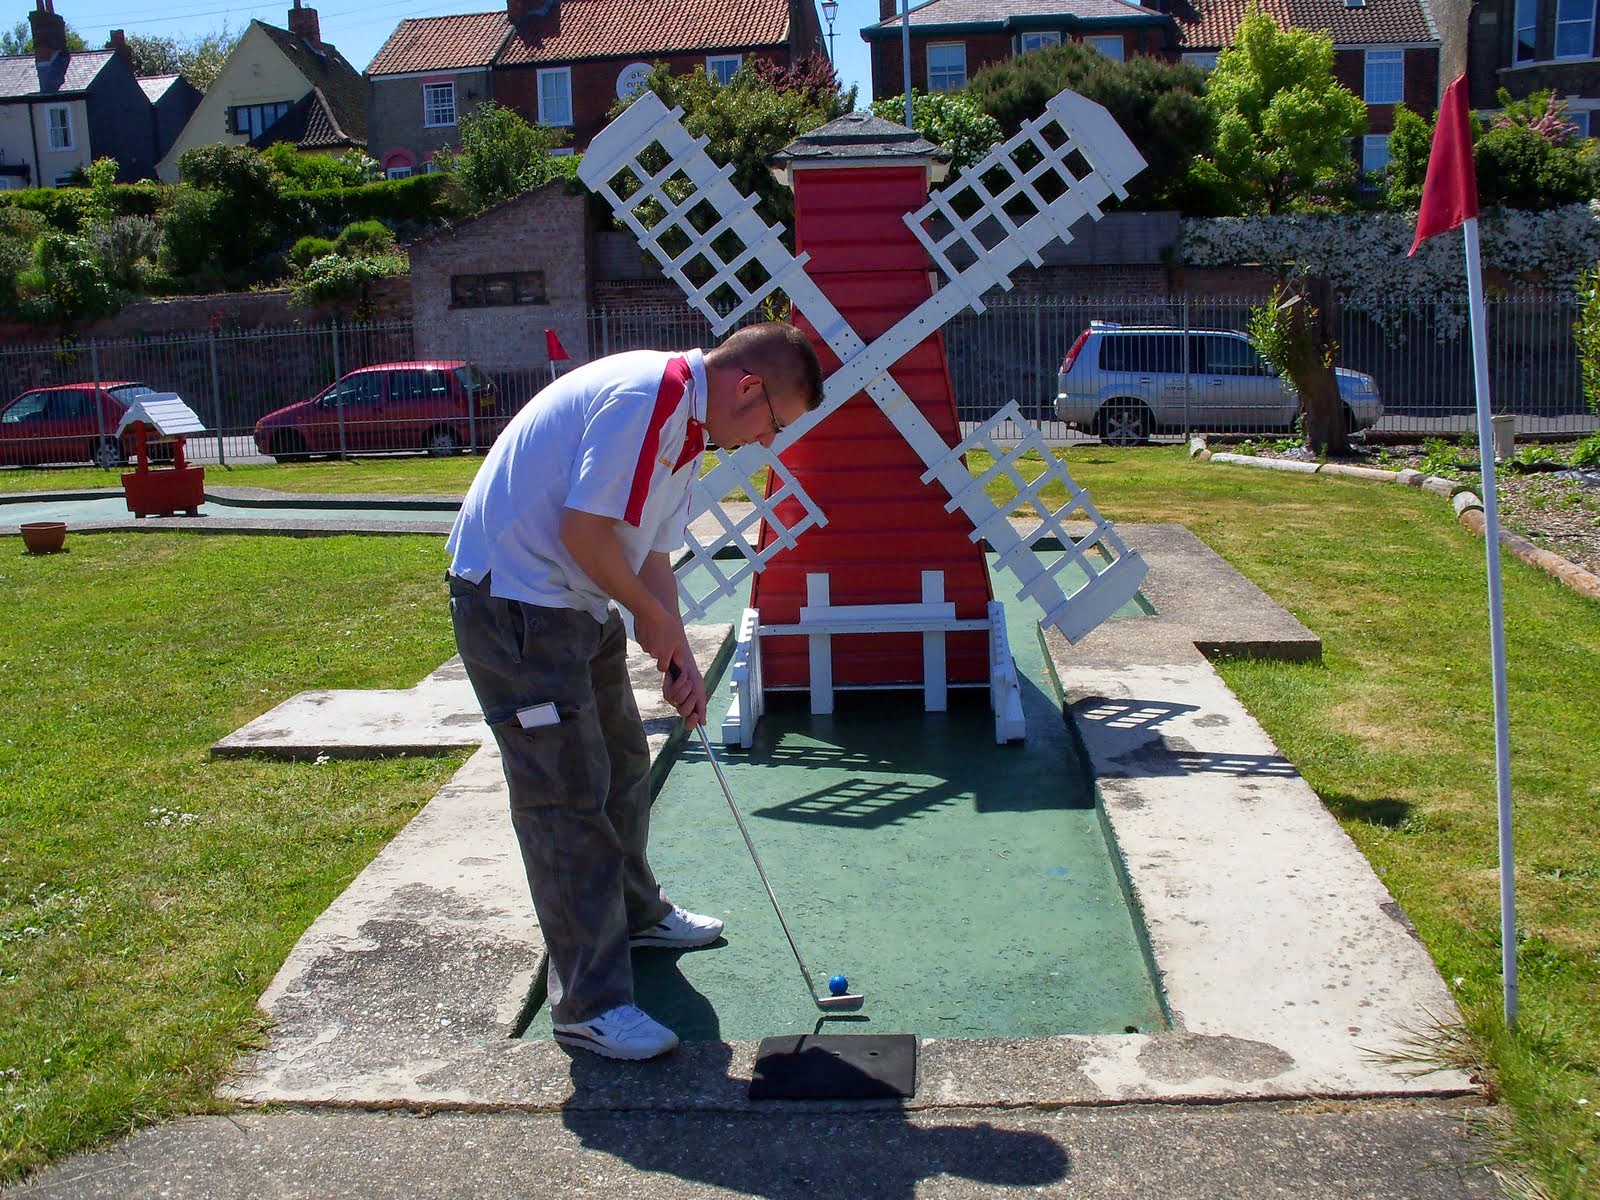 Crazy Golf at Pops Meadow in Gorleston-on-Sea, Norfolk